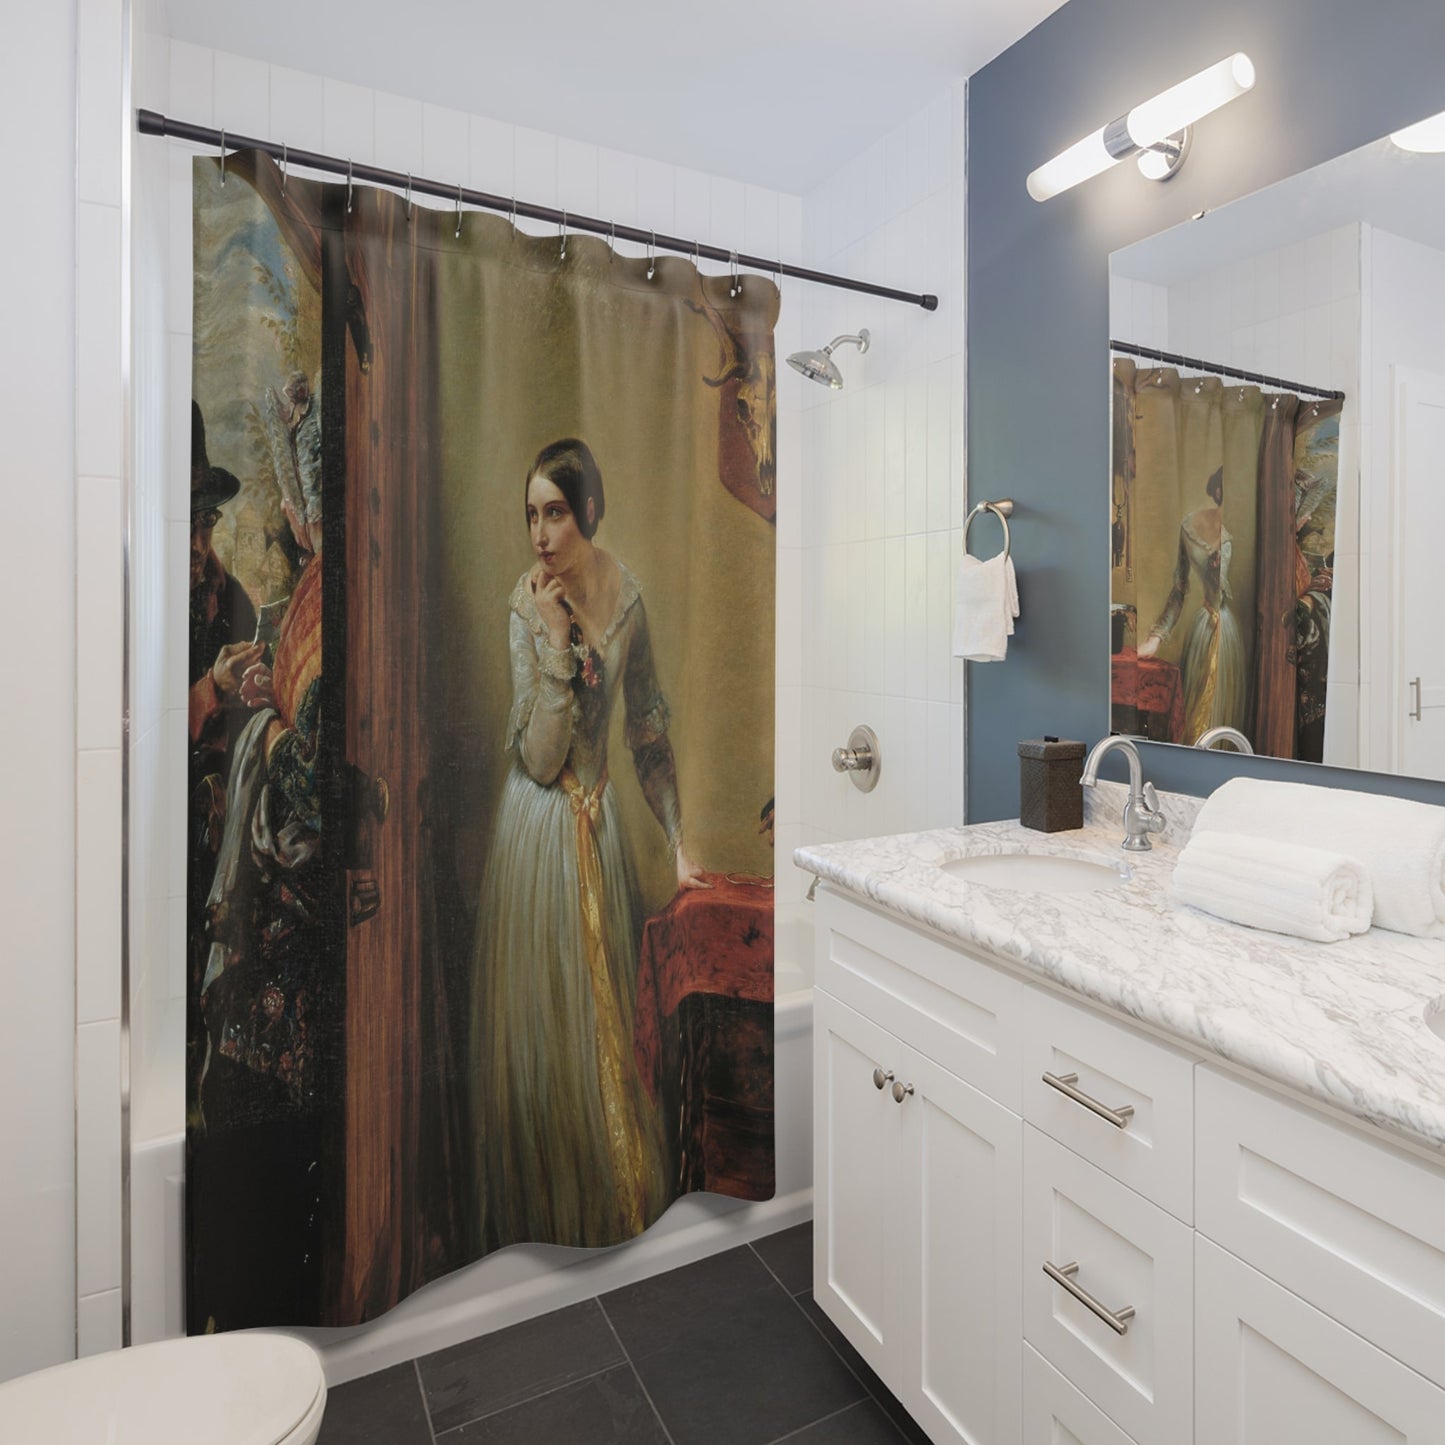 Secretly Waiting Shower Curtain Best Bathroom Decorating Ideas for Victorian Decor